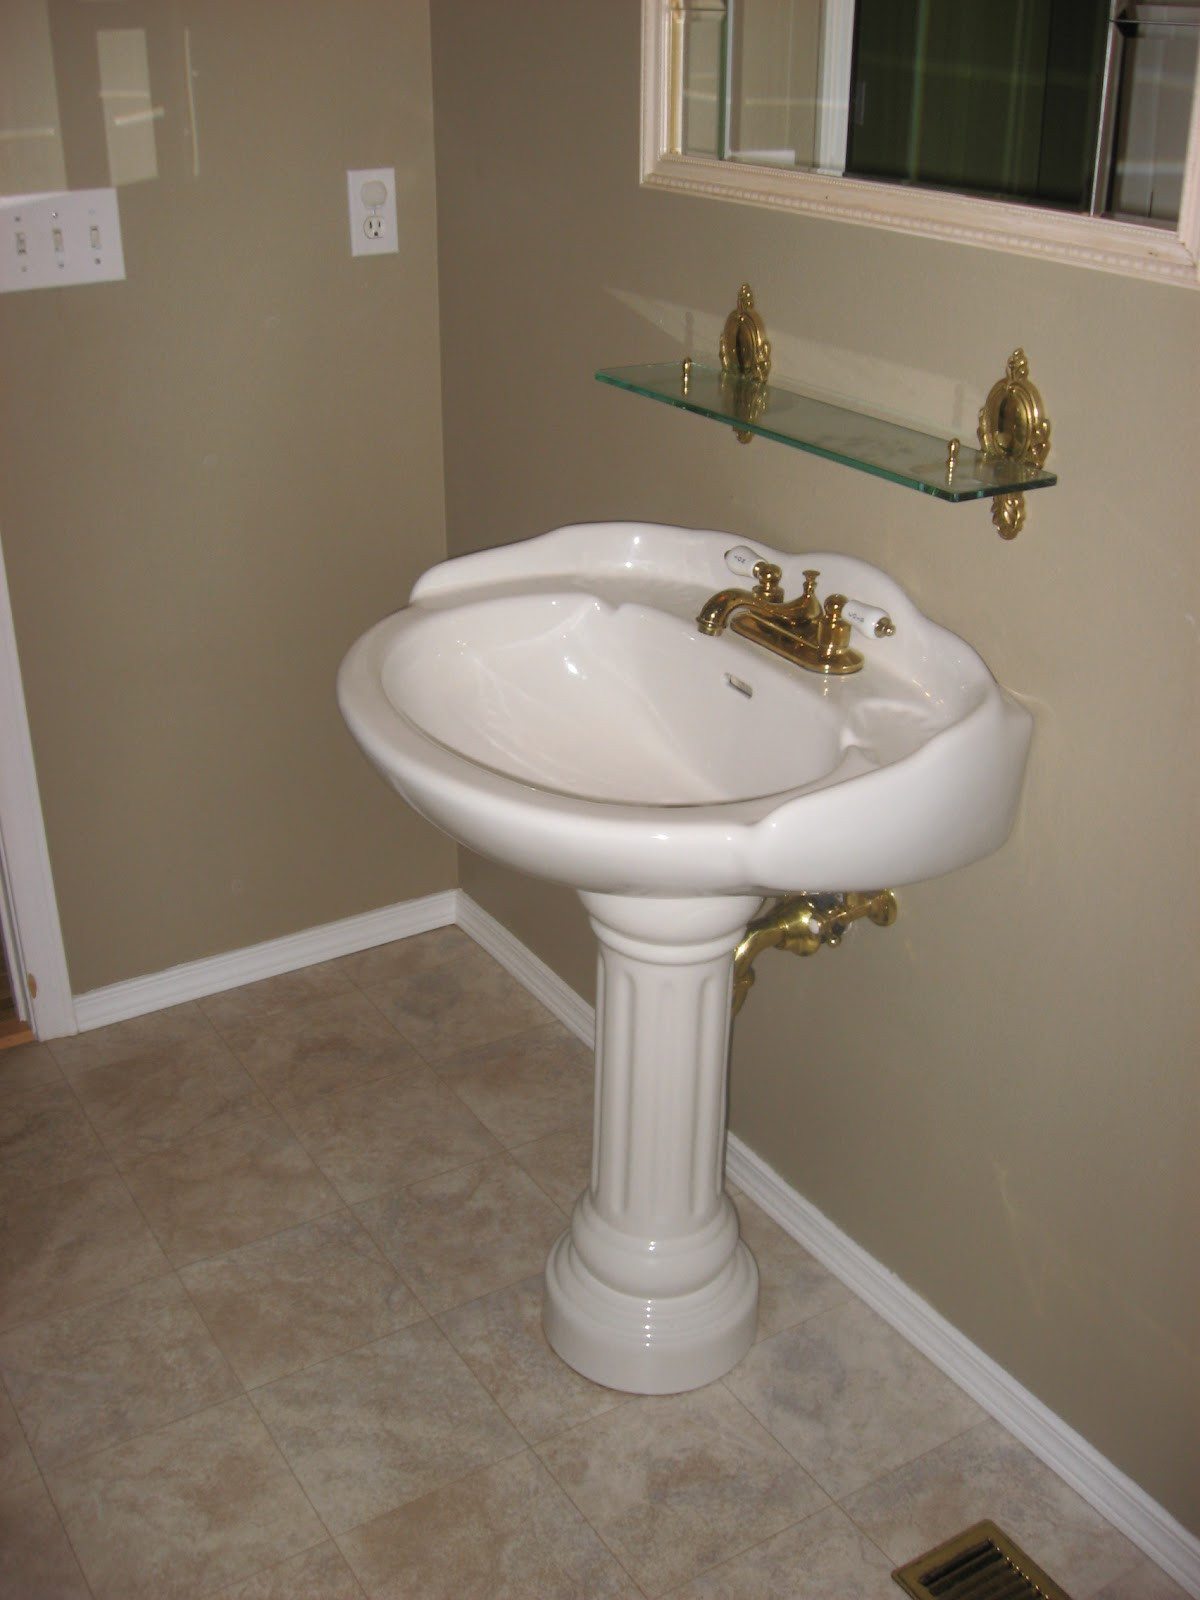 Home Depot Bathroom Pedestal Sinks
 f for the Season March 2012